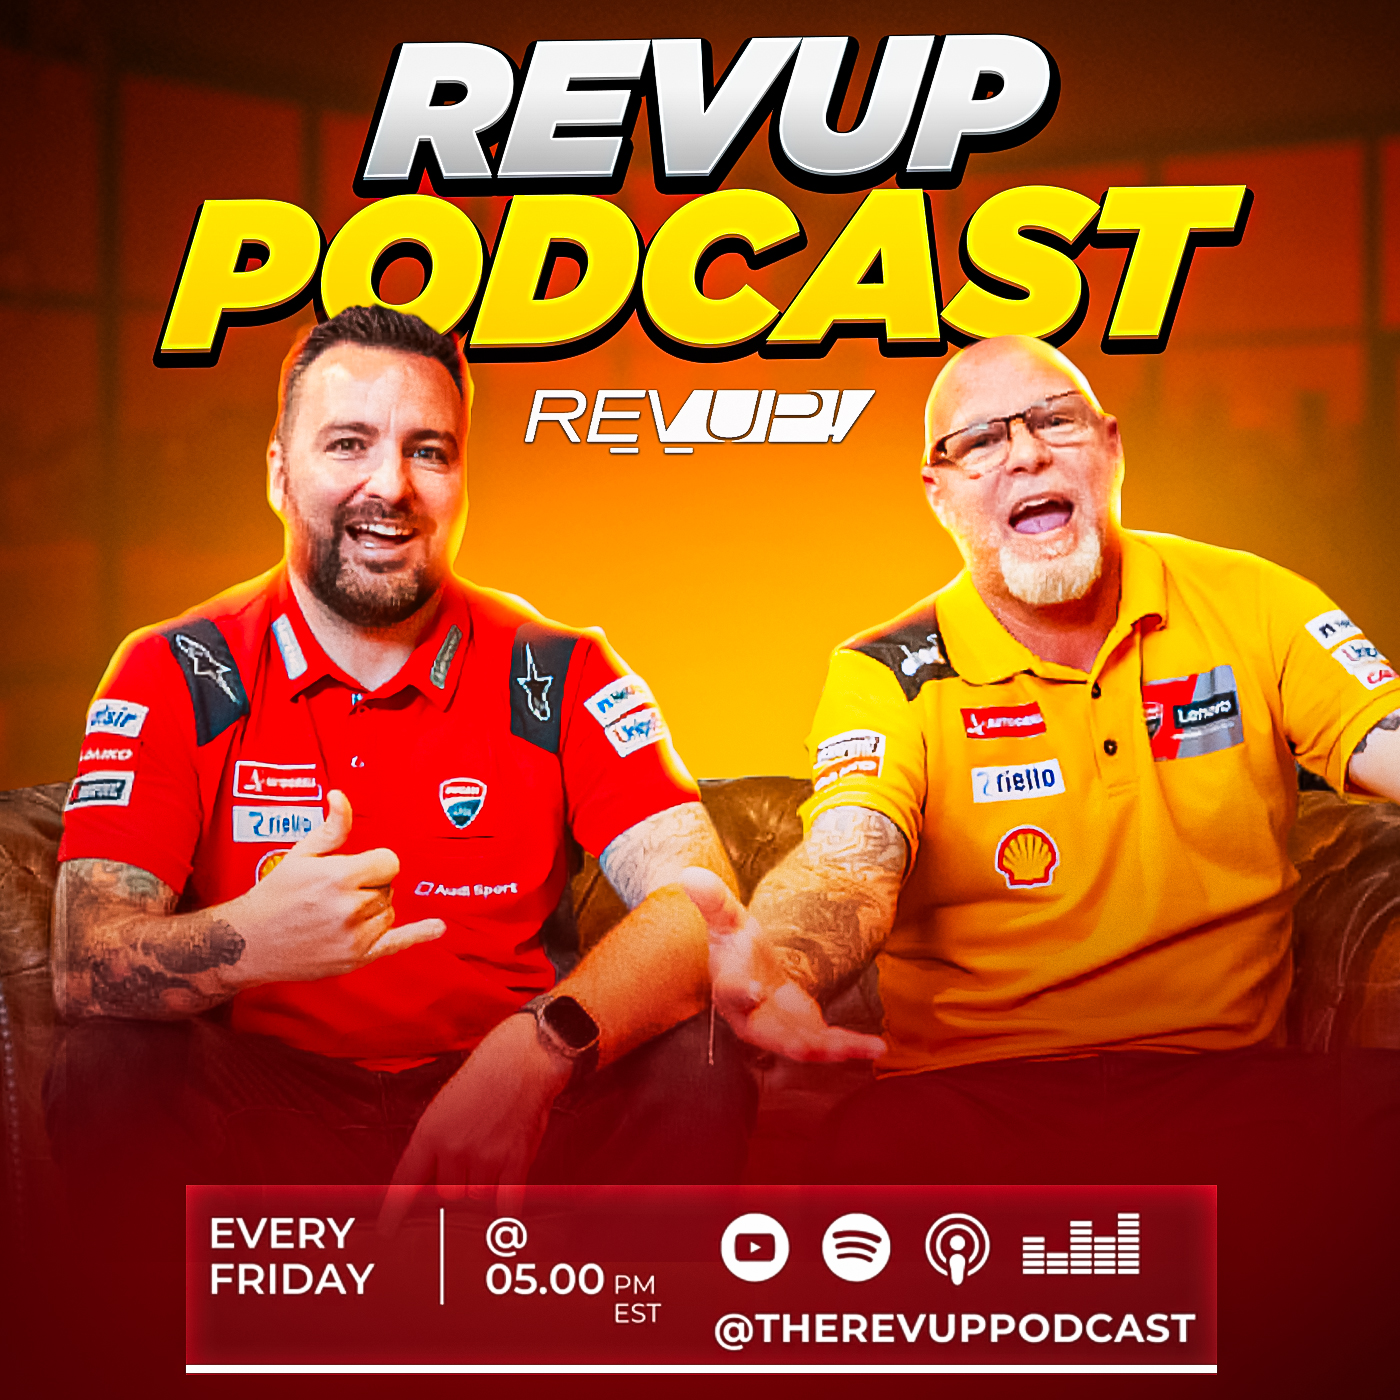 RevUP Podcast